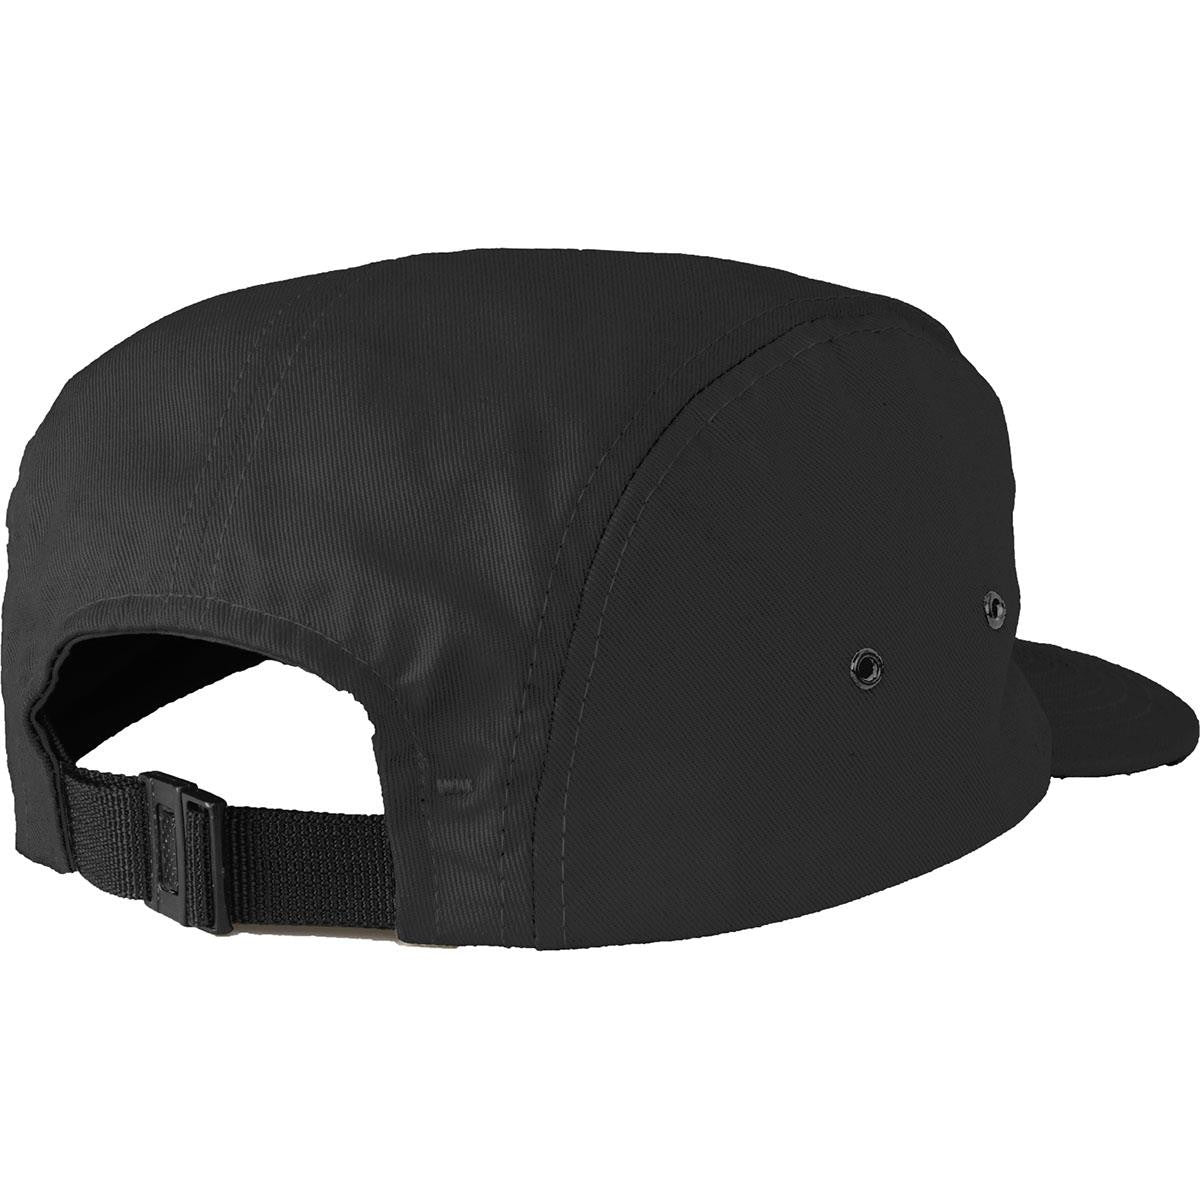 'Flat Line' - Black/Grey 5-Panel Hat Fabric: 100% Cotton twill